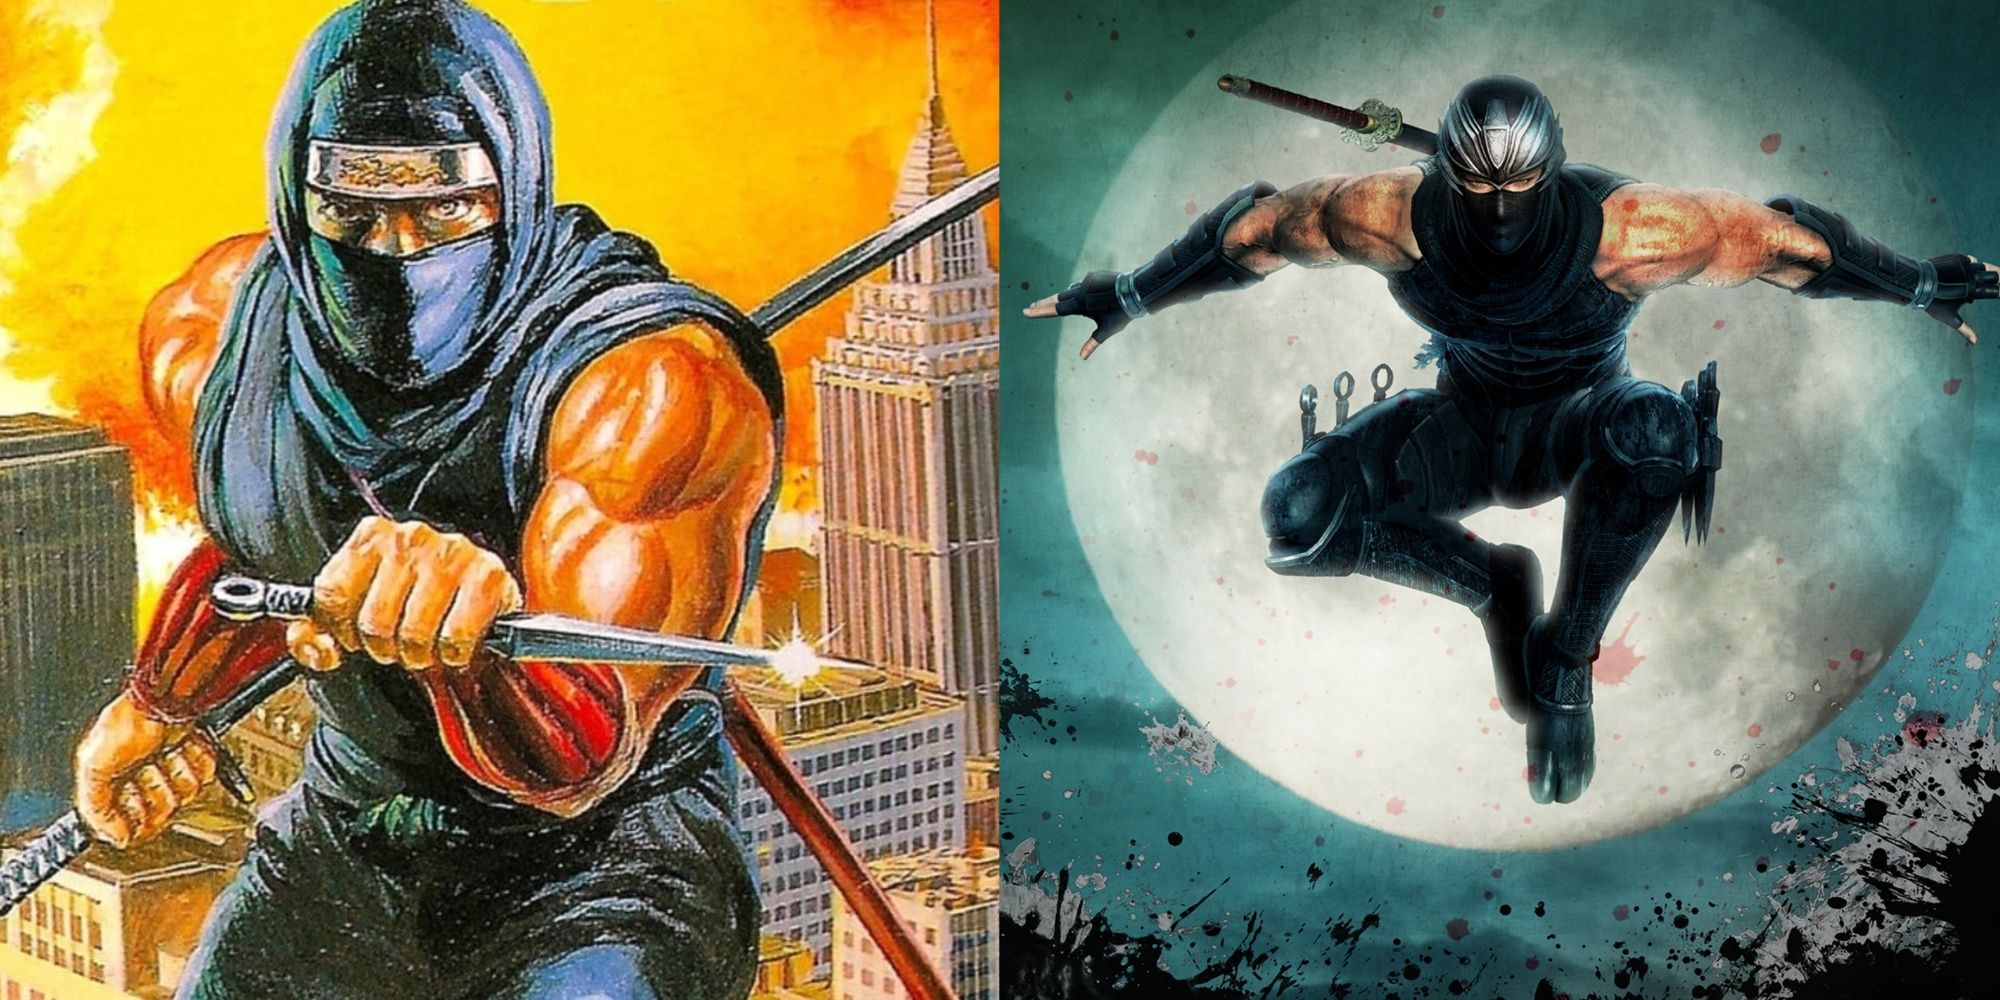 Ninja Gaiden NES cover art and promo art for the Ninja Gaiden Master Collection